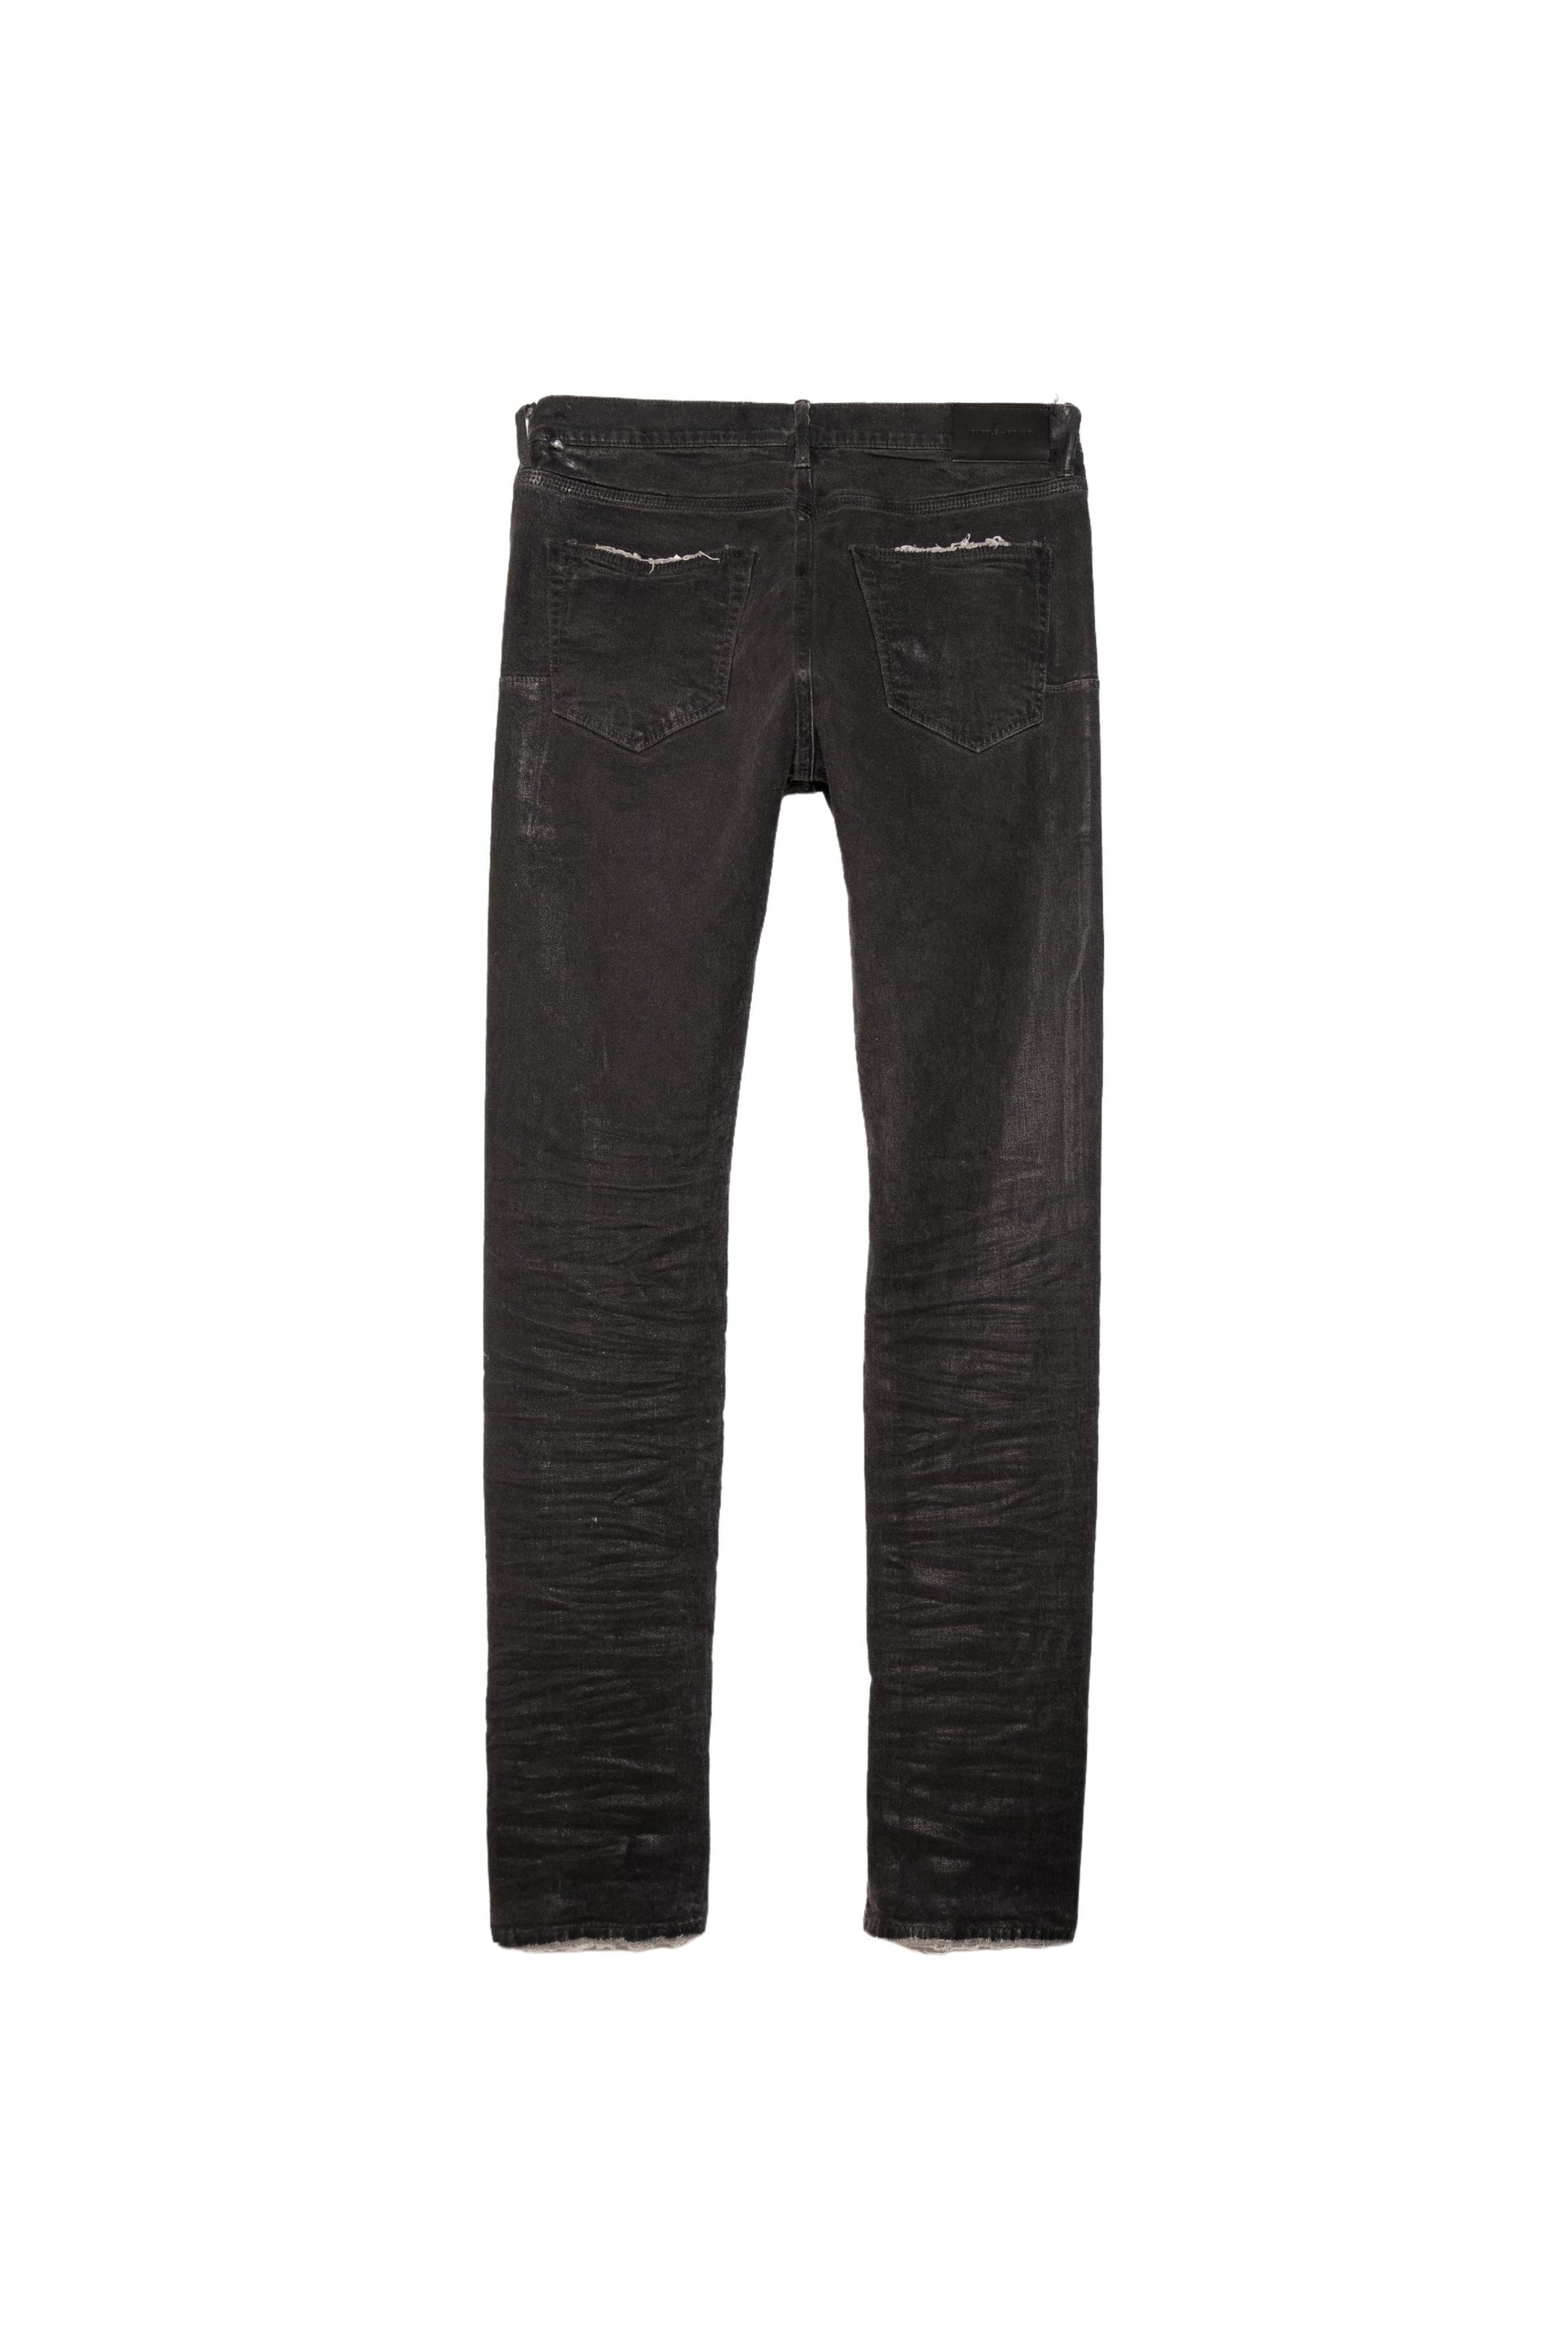 PURPLE BRAND - Men's Denim Jean - Low Rise Skinny - Style No. P001 - Grey Wax Coated - Back